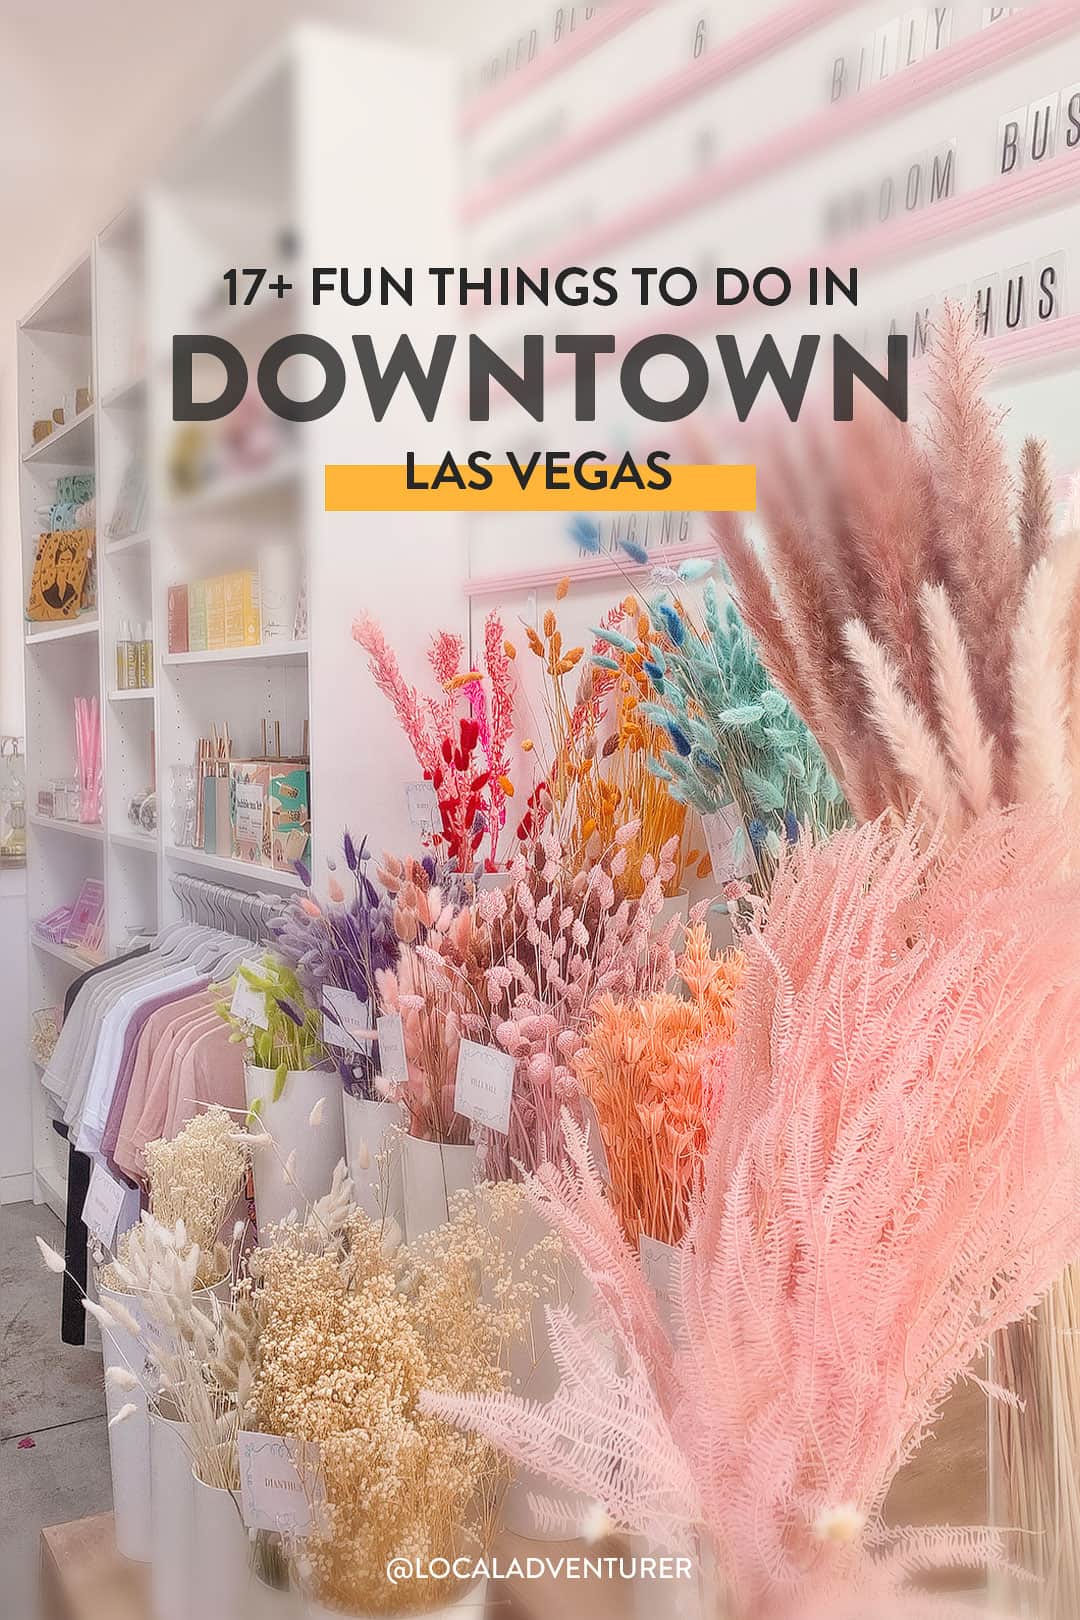 17+ Fun Things to Do in Downtown Las Vegas